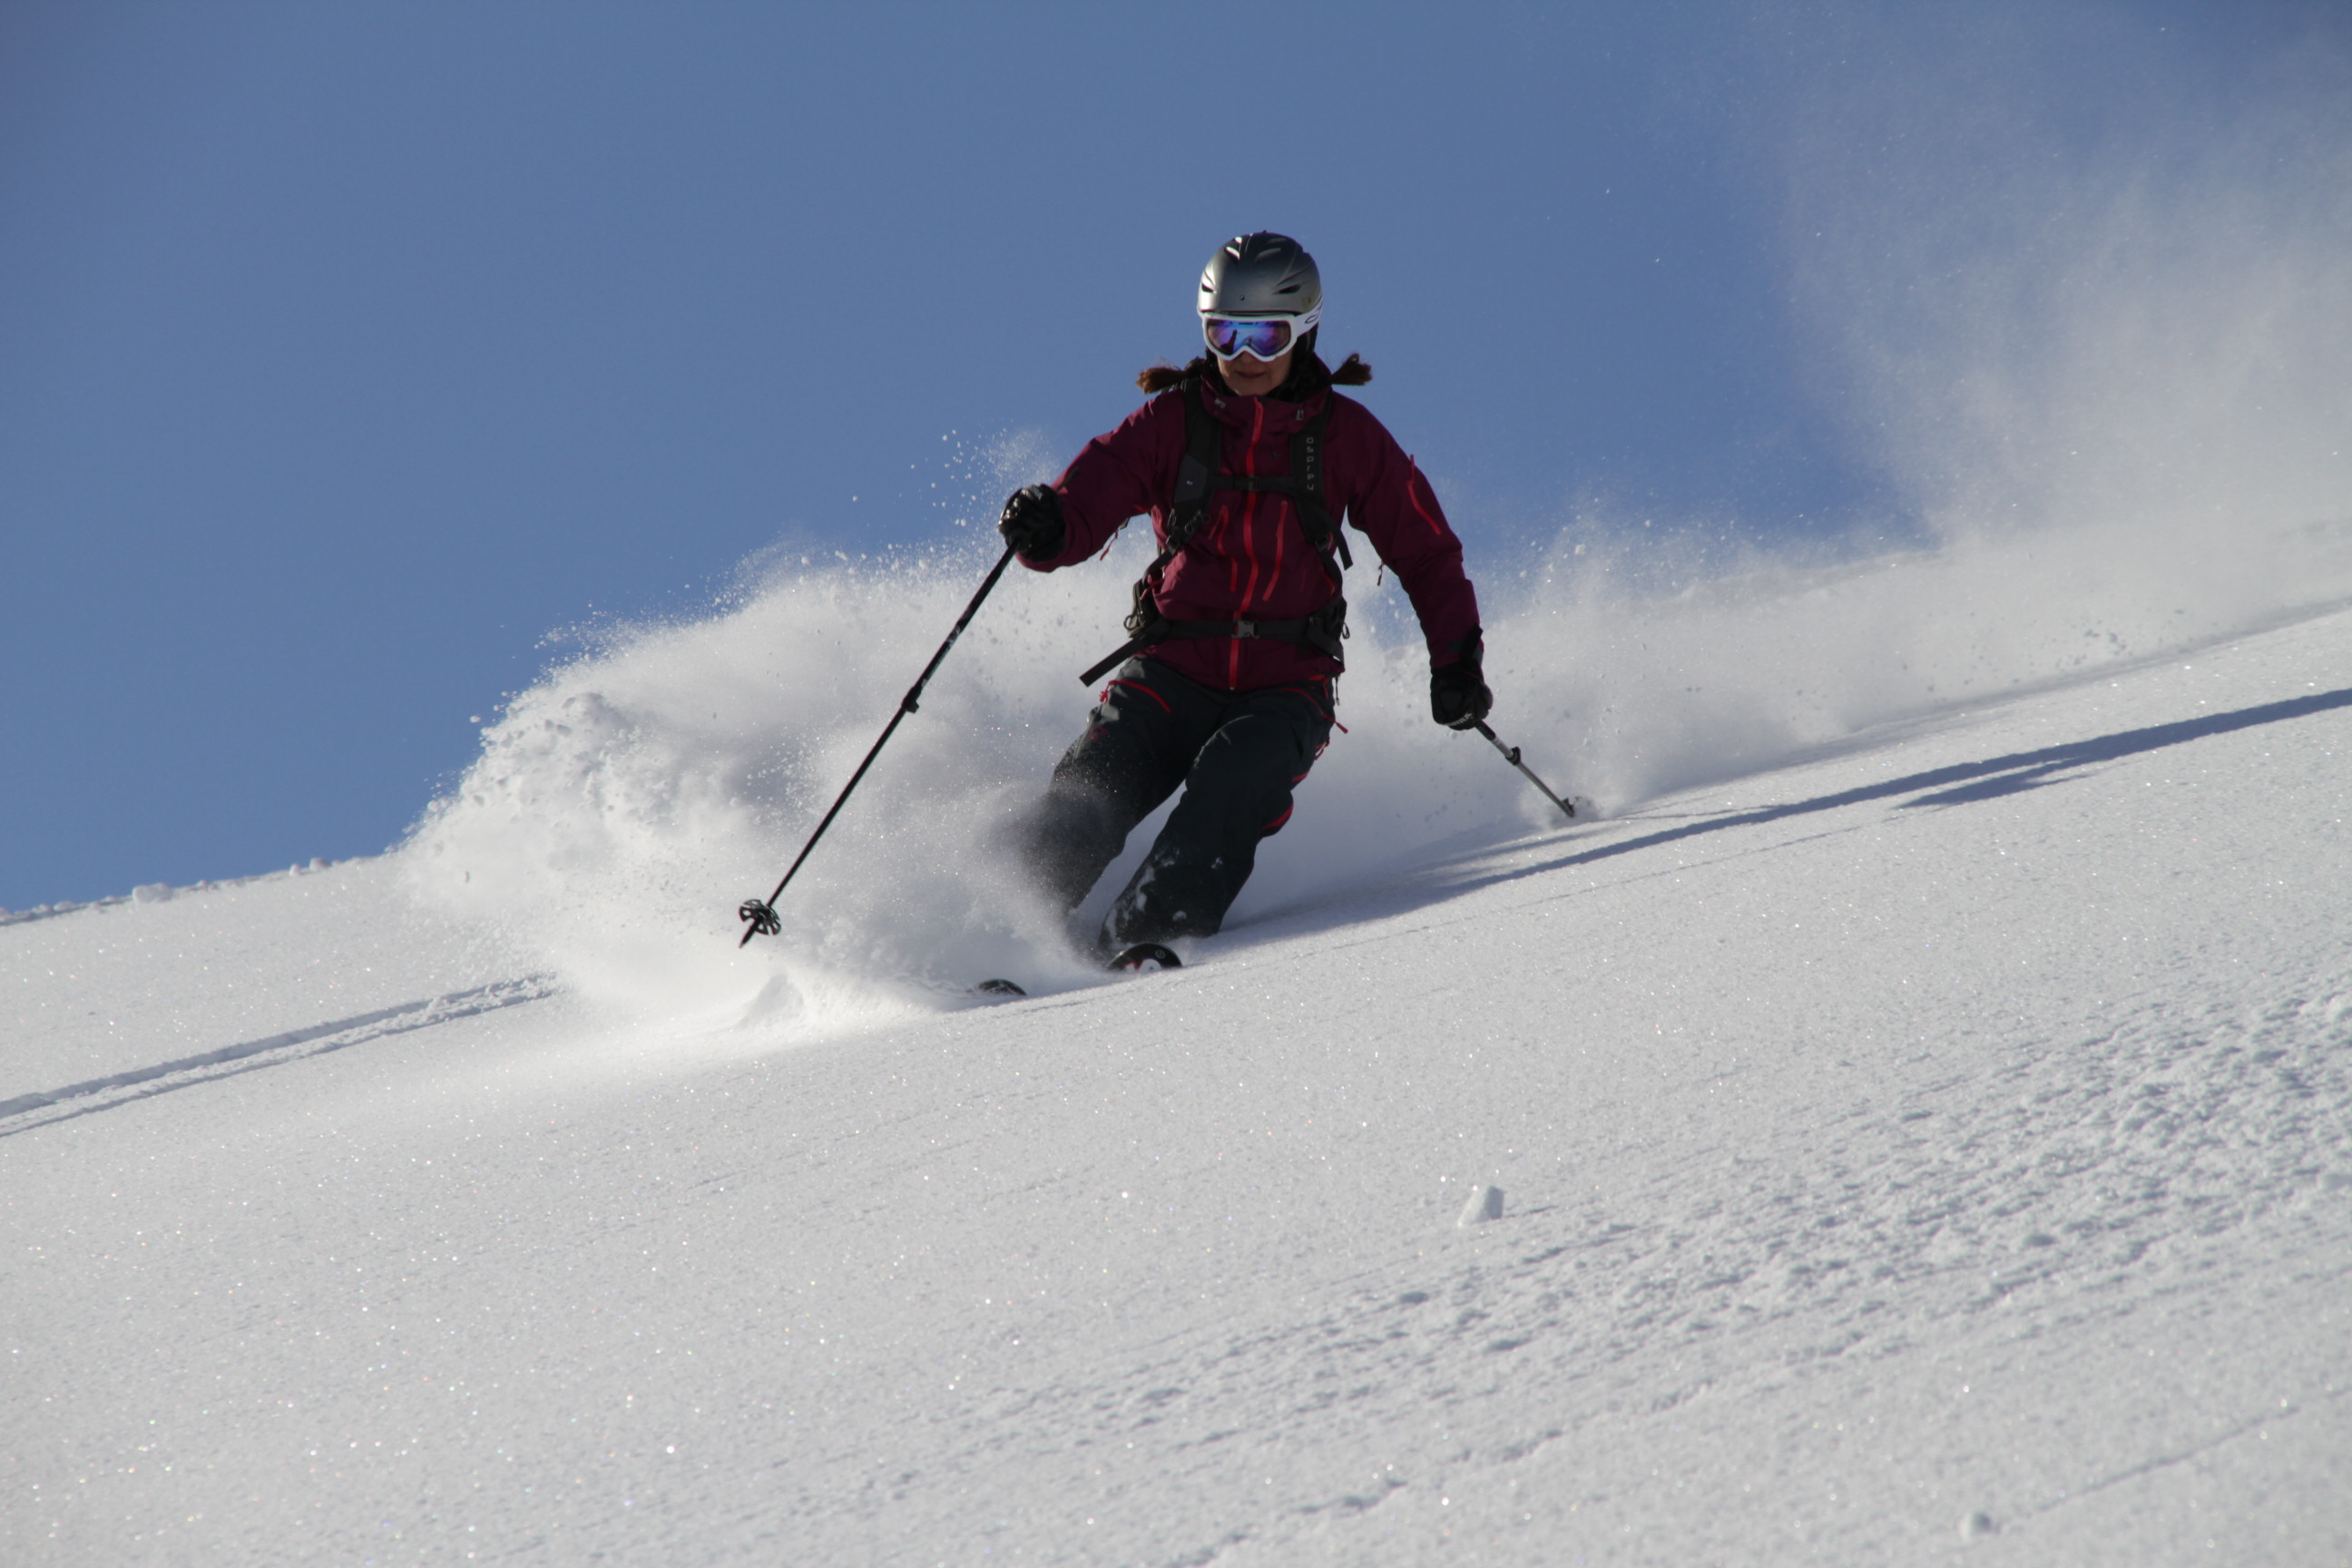 Anita powder skiing. March 24 2010 Photo: Andreas Bengtsson 